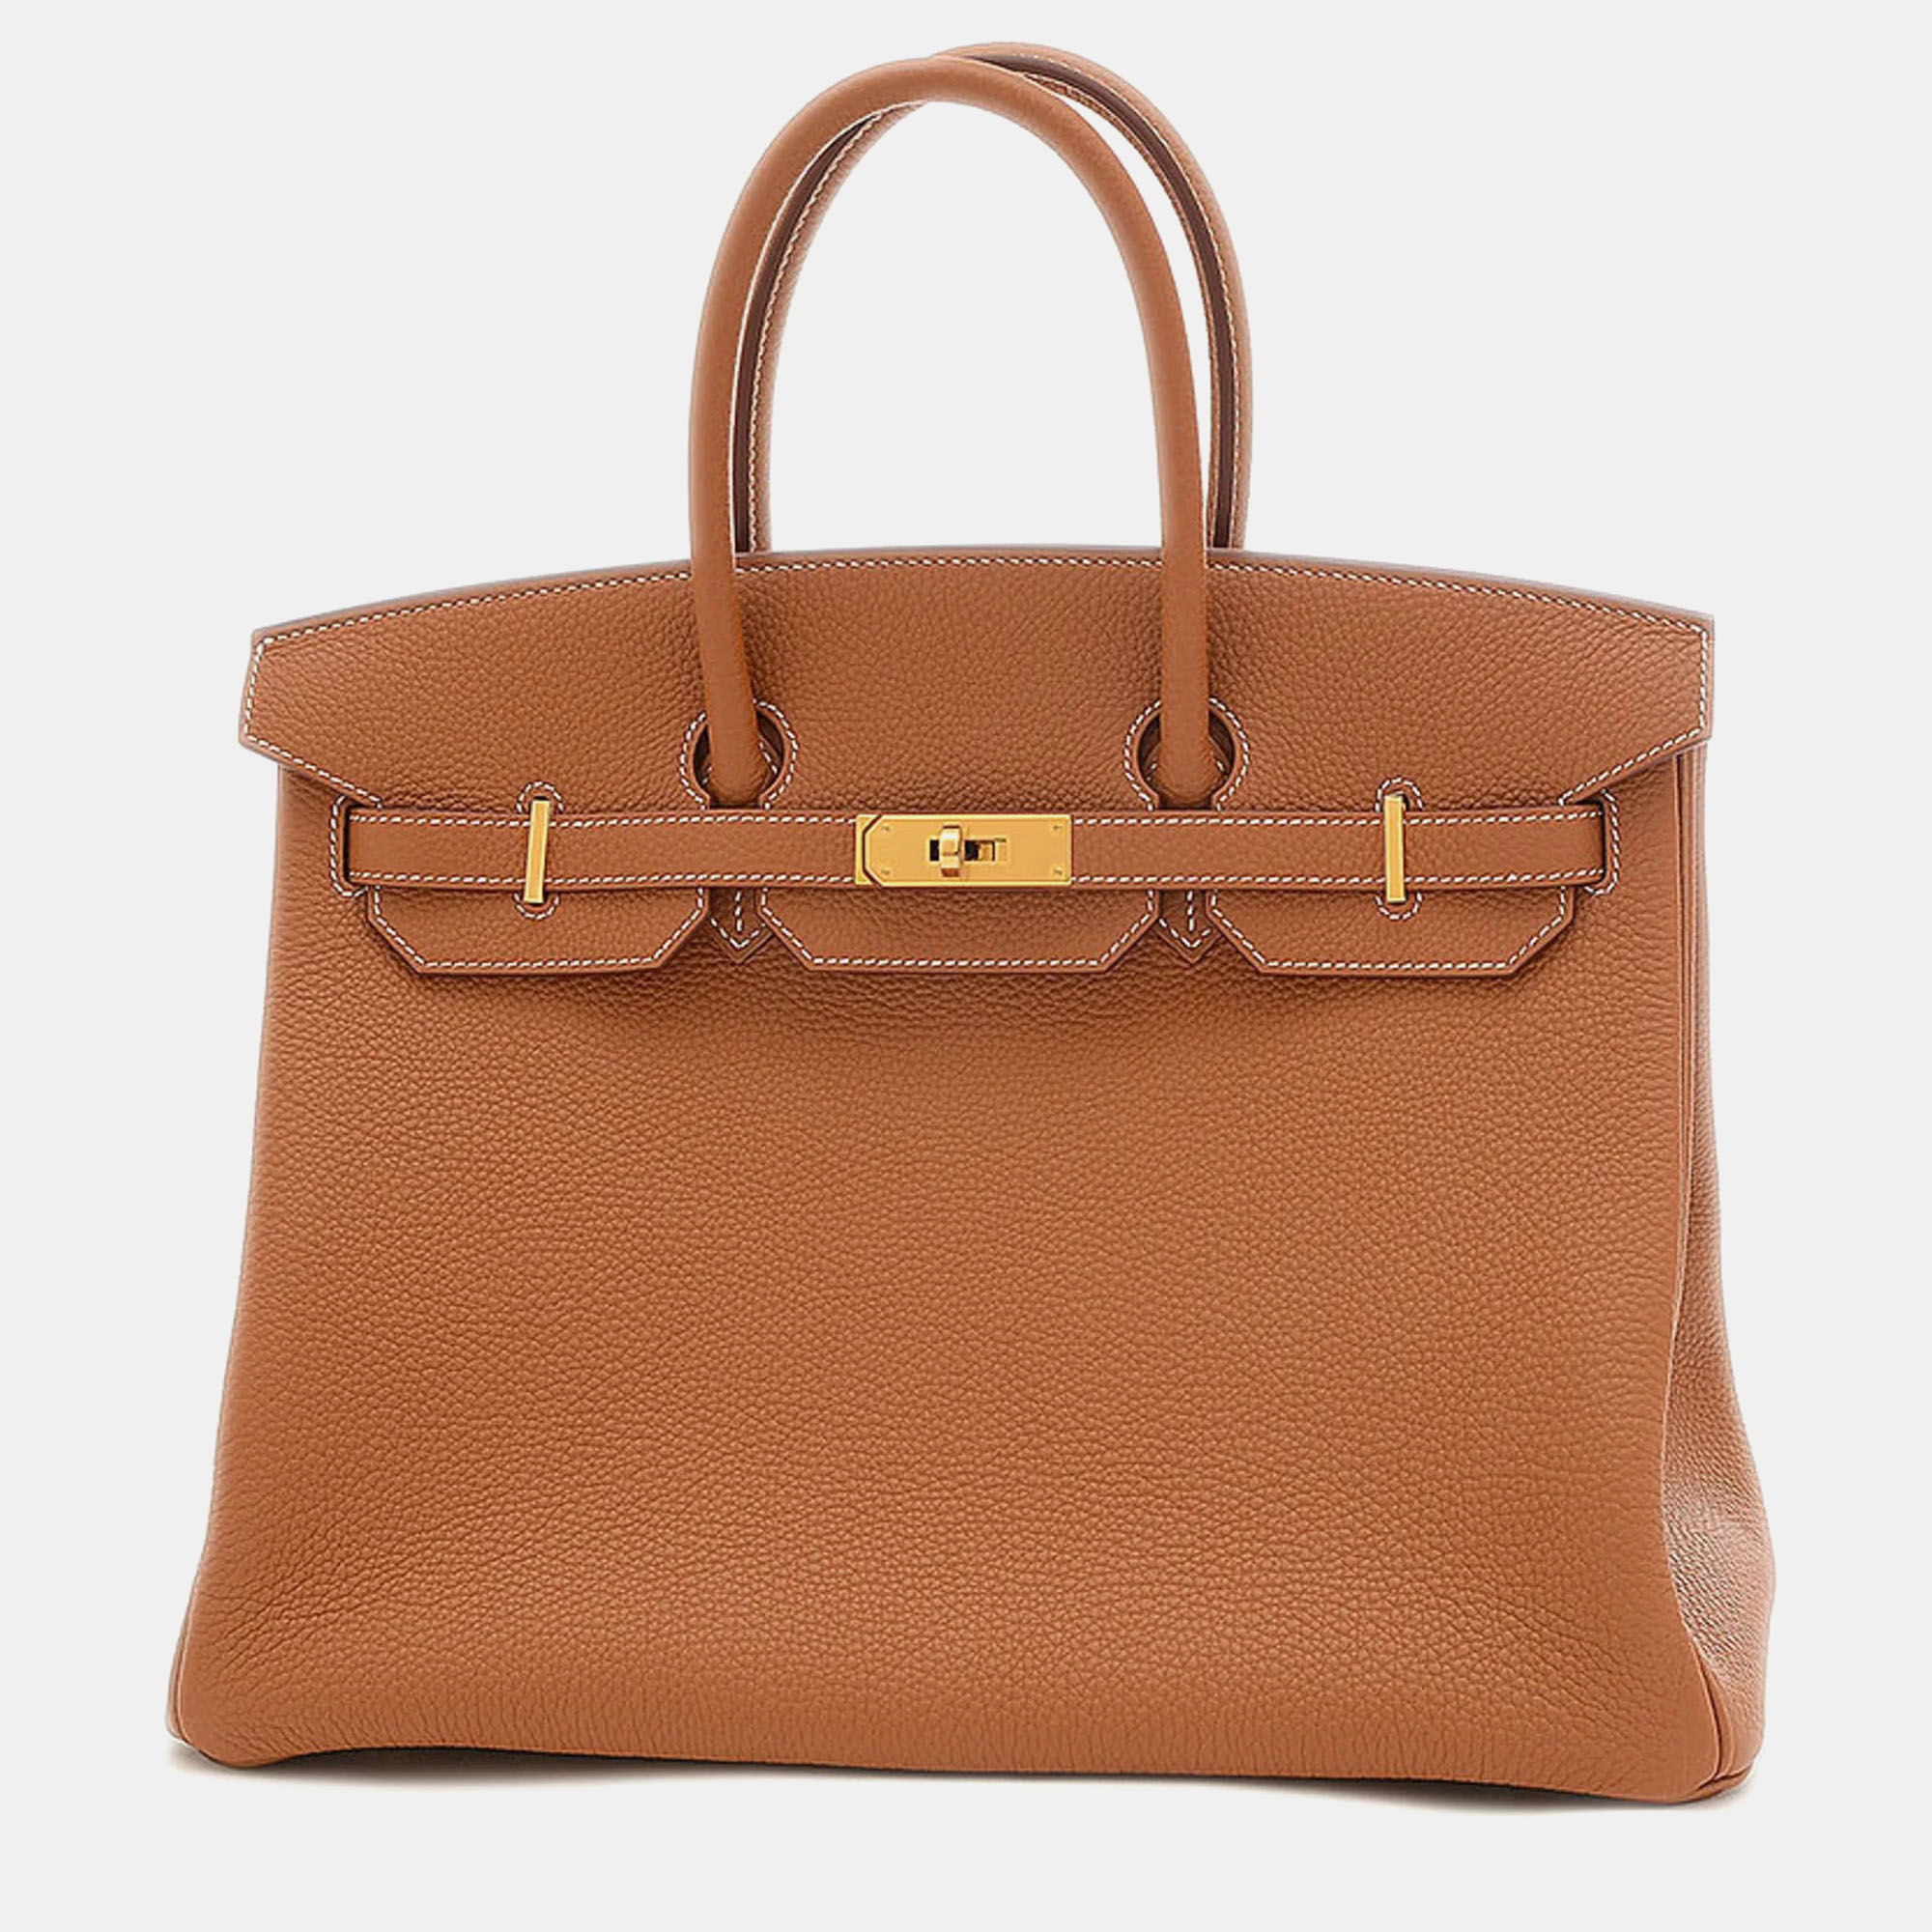 Hermes gold togo birkin 35 handbag